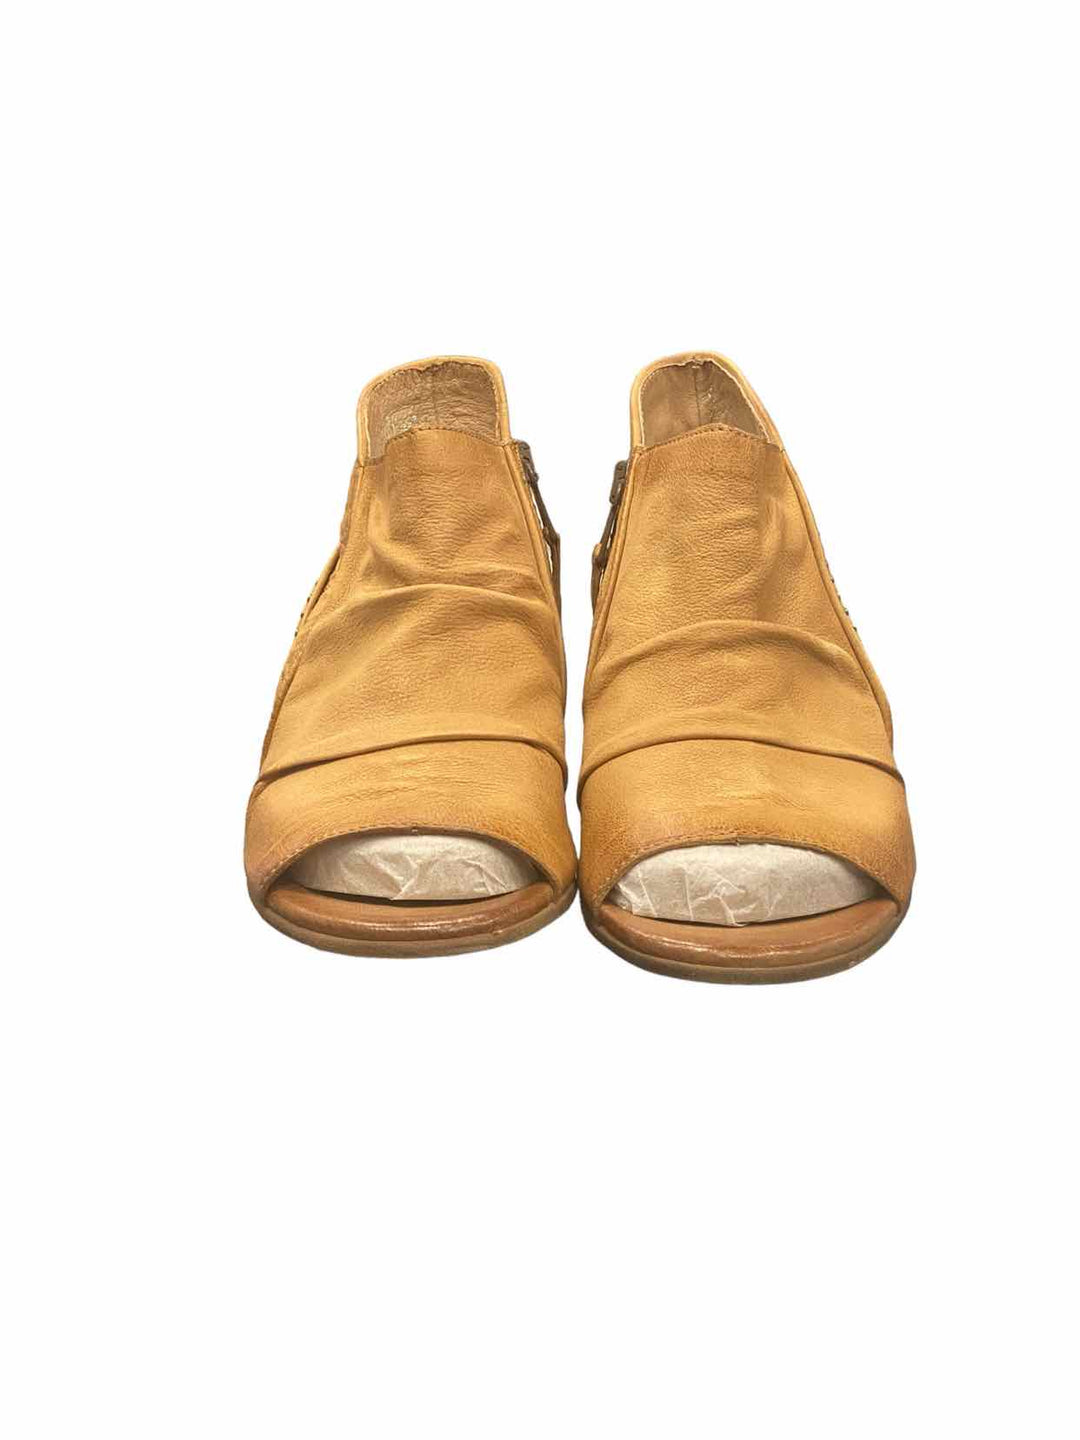 Miz Mooz Shoe Size 37 Brown Leather NWOT Sandals